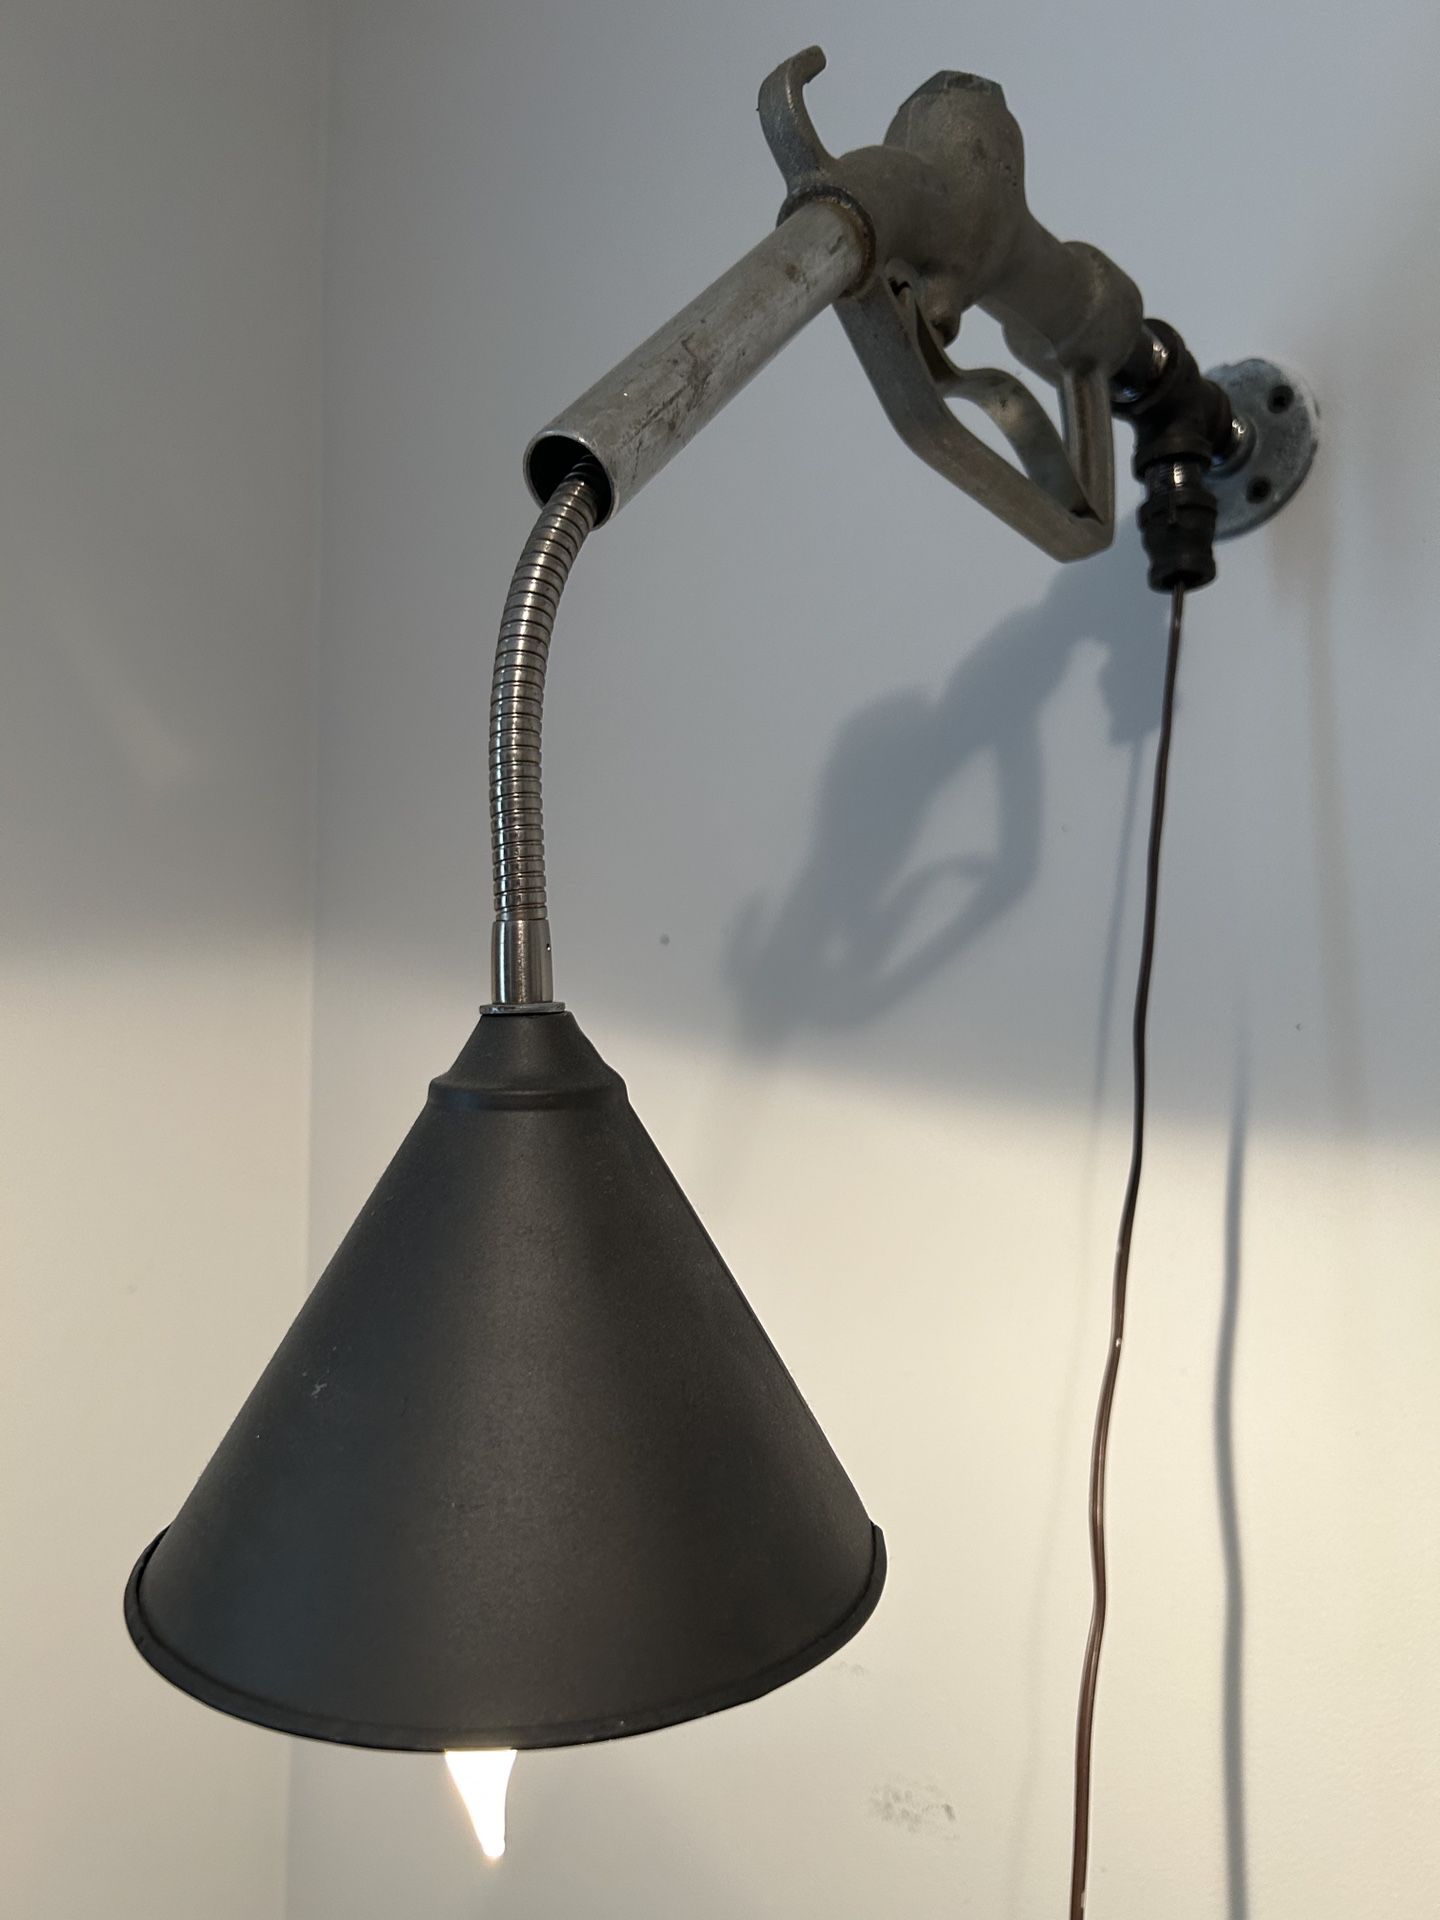 Custom Lamp For Garage Or Man Cave 